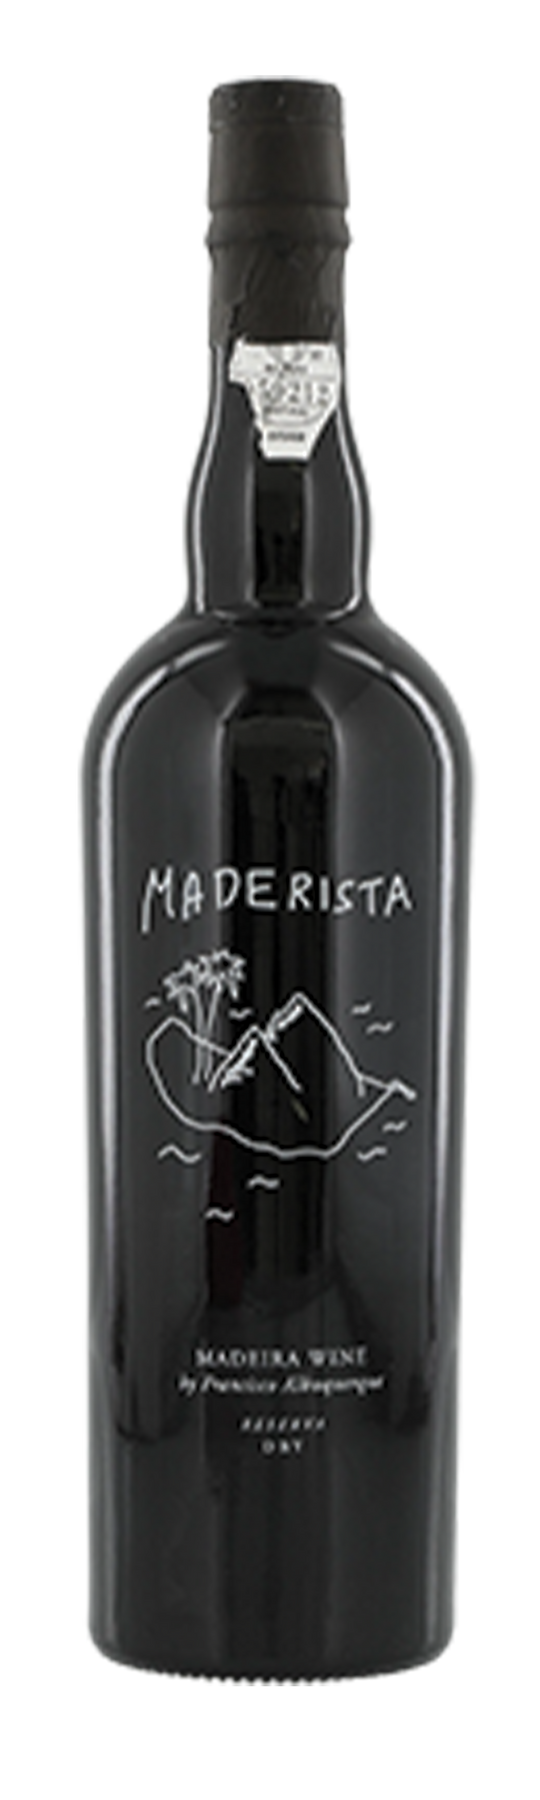 Maderista Dry Tinta Negra Reserva 19% 75cl